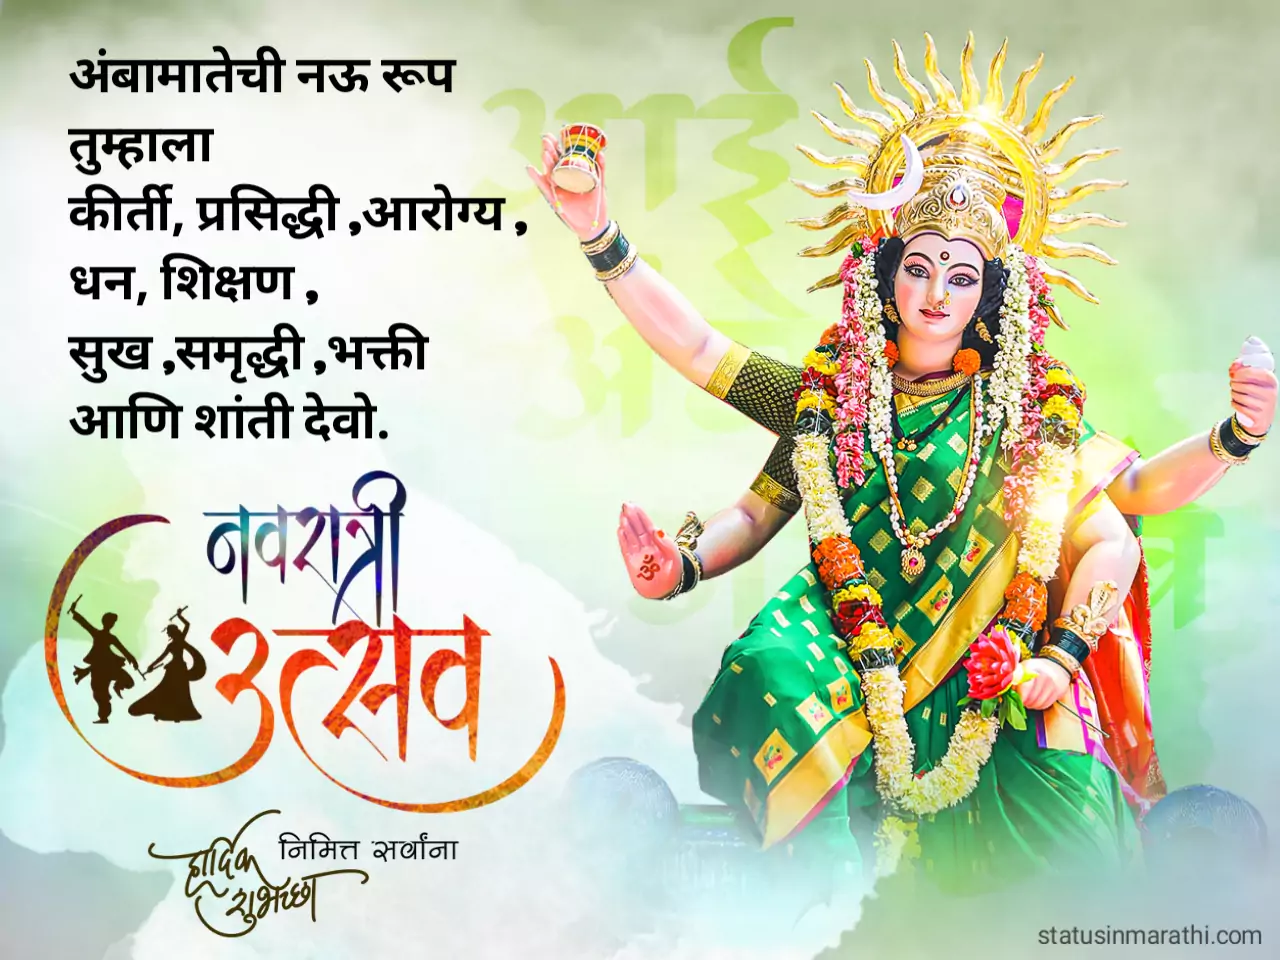 Navratri wishes in marathi